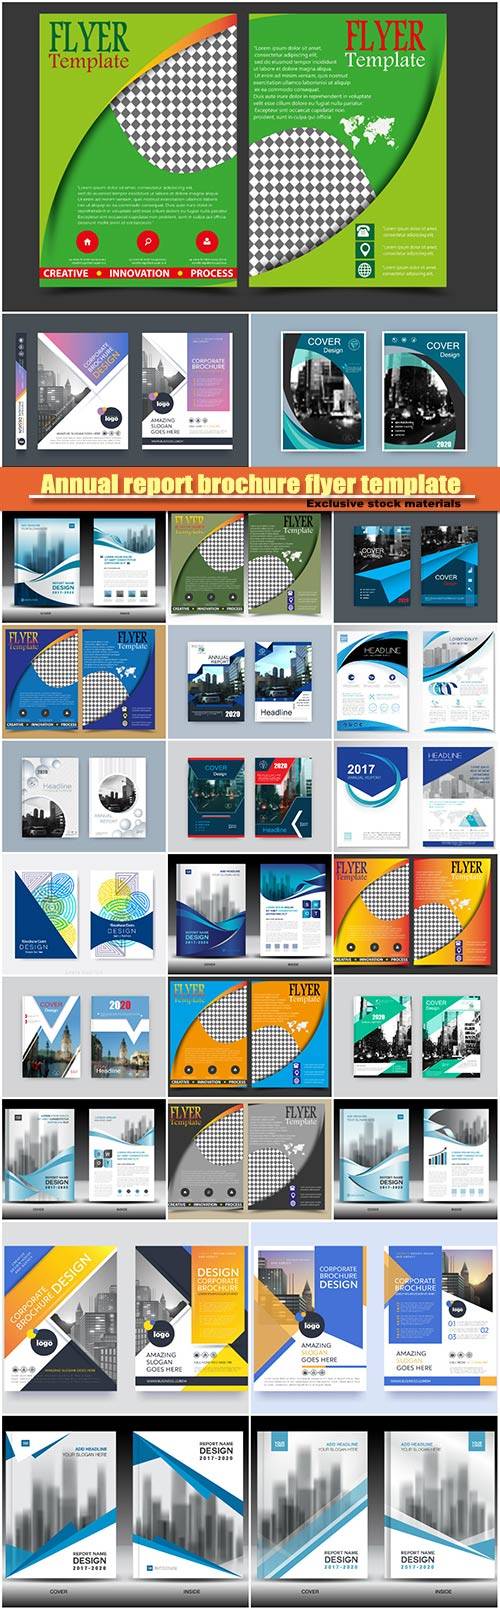 Annual report brochure flyer template, cover design, business company profi ...